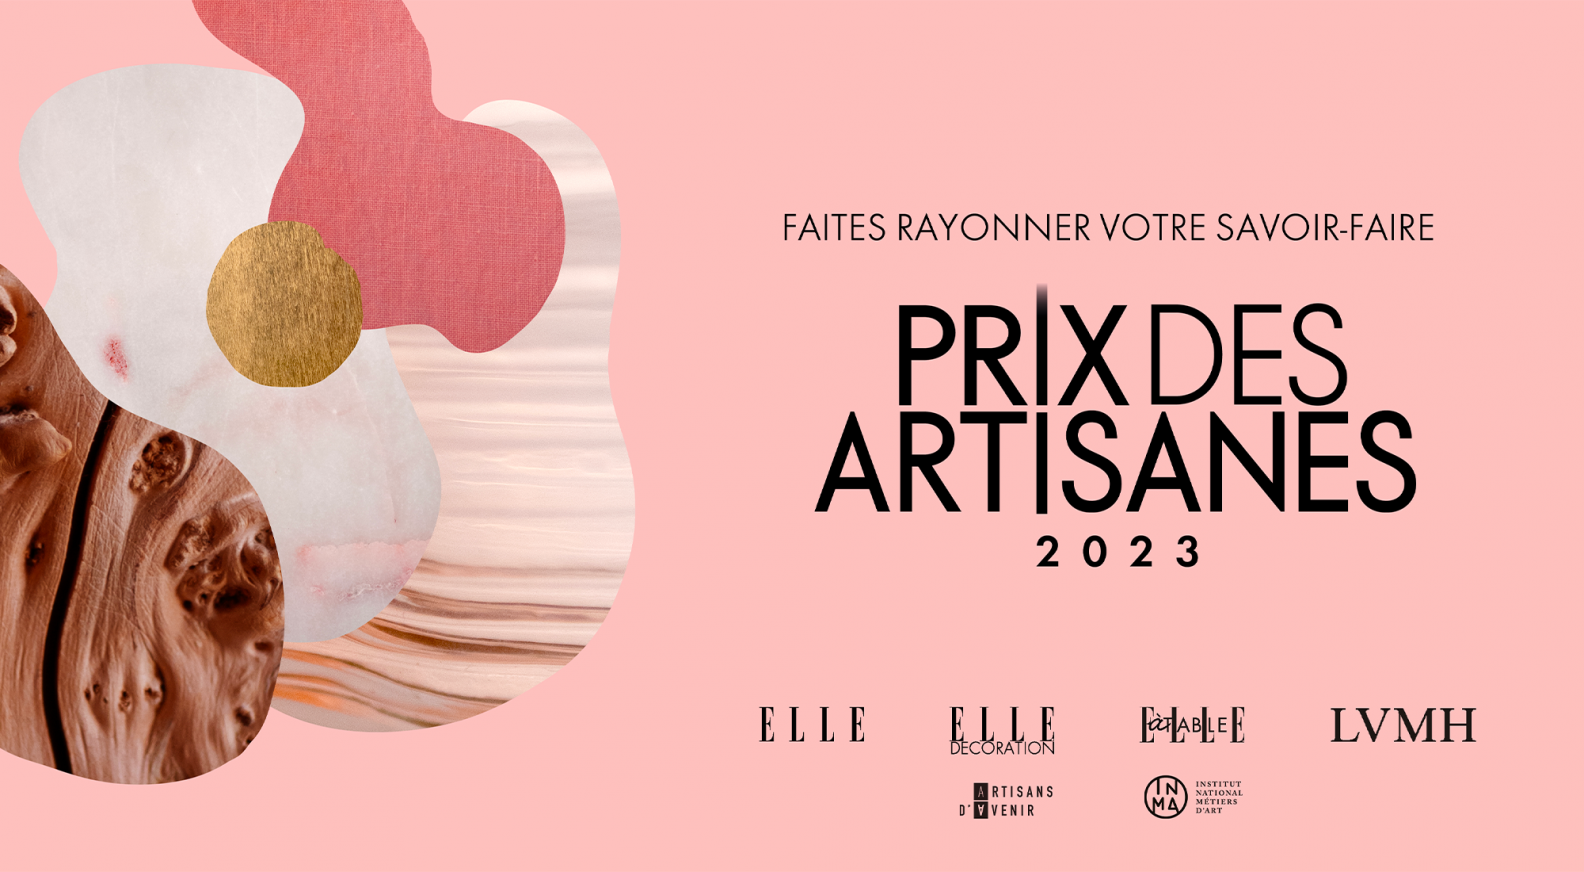 ELLE and LVMH announce four Prix des Artisanes winners - LVMH